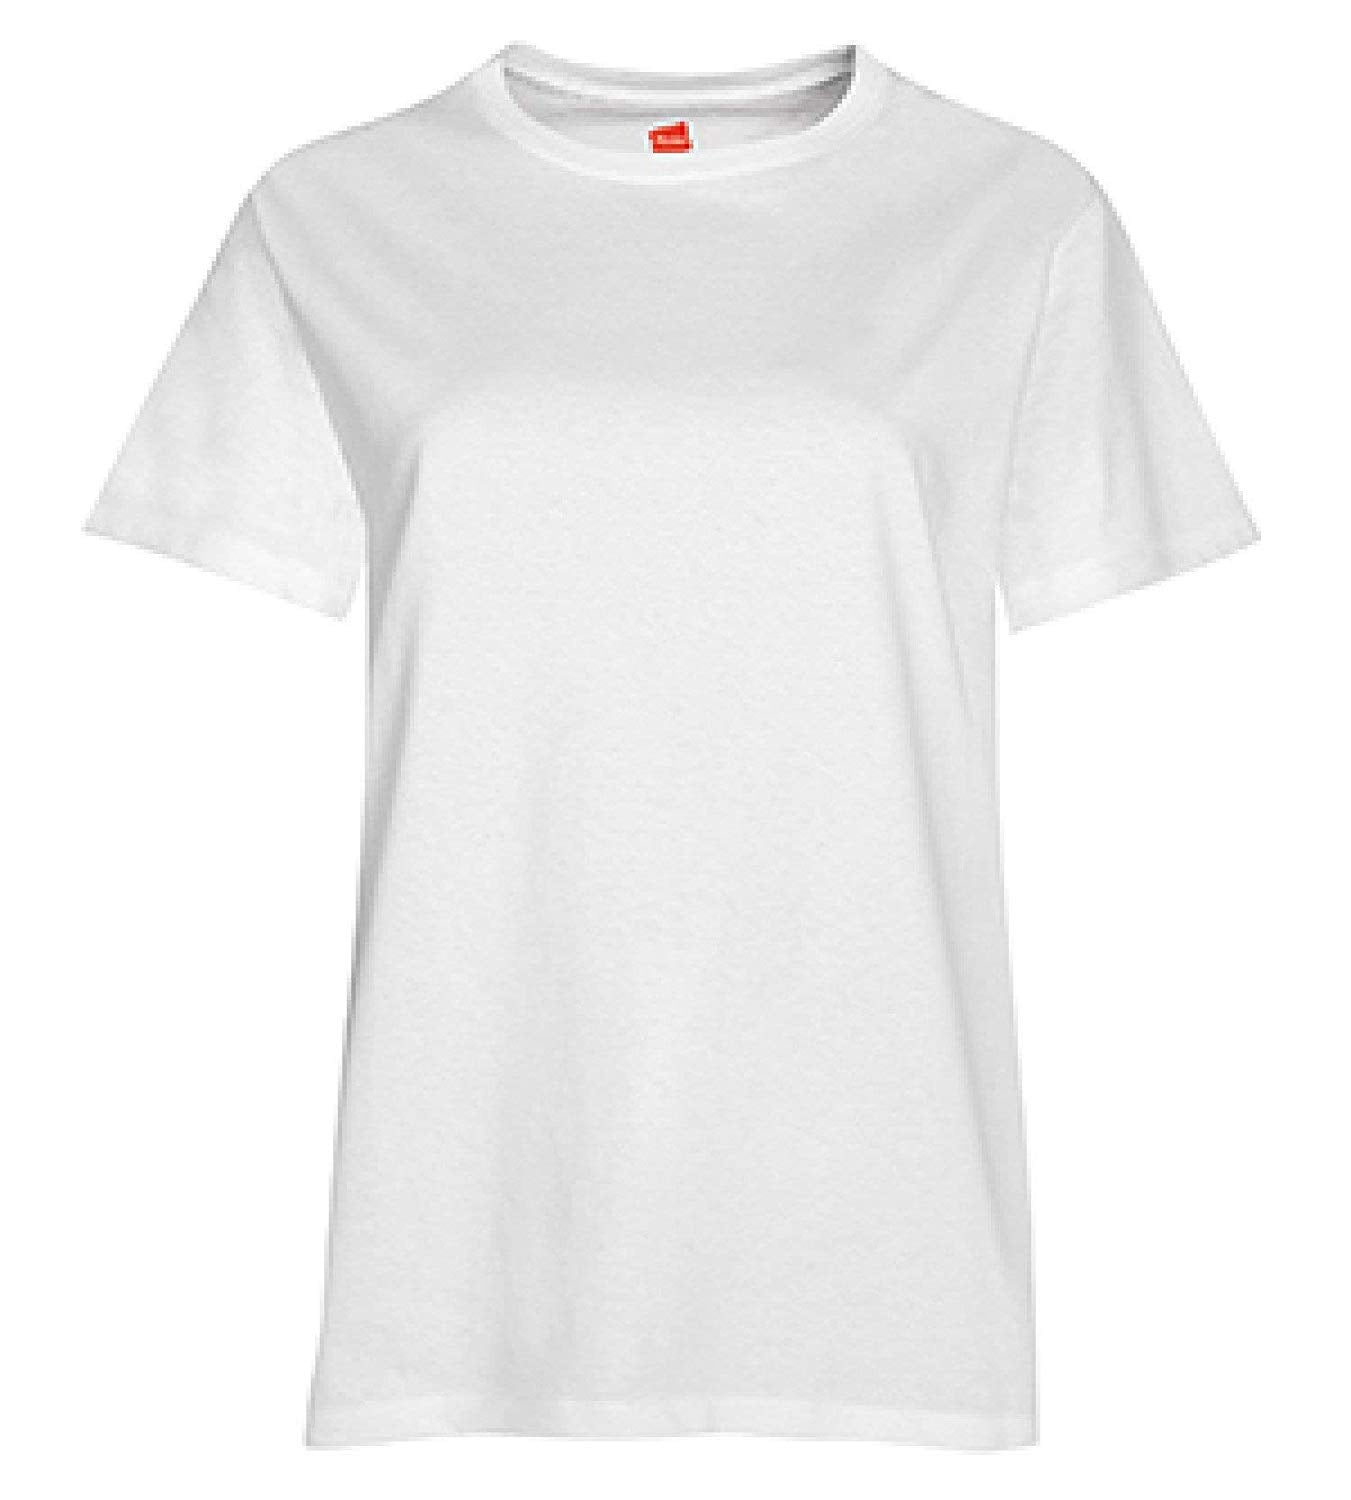 Best Plain Comfortable White T-Shirt for Women 2021 POPSUGAR Fashion